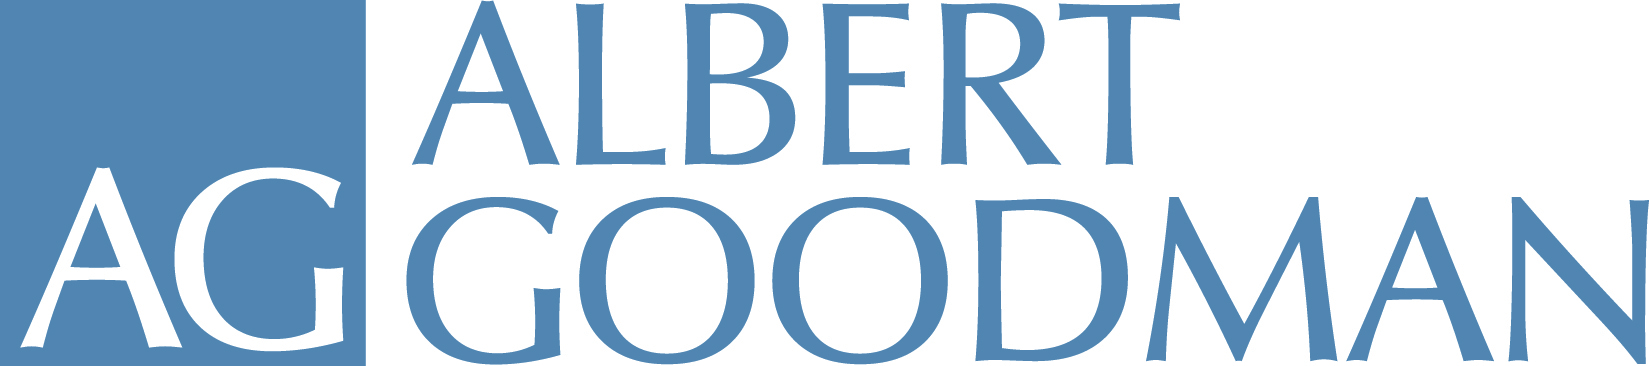 albert goodman logo